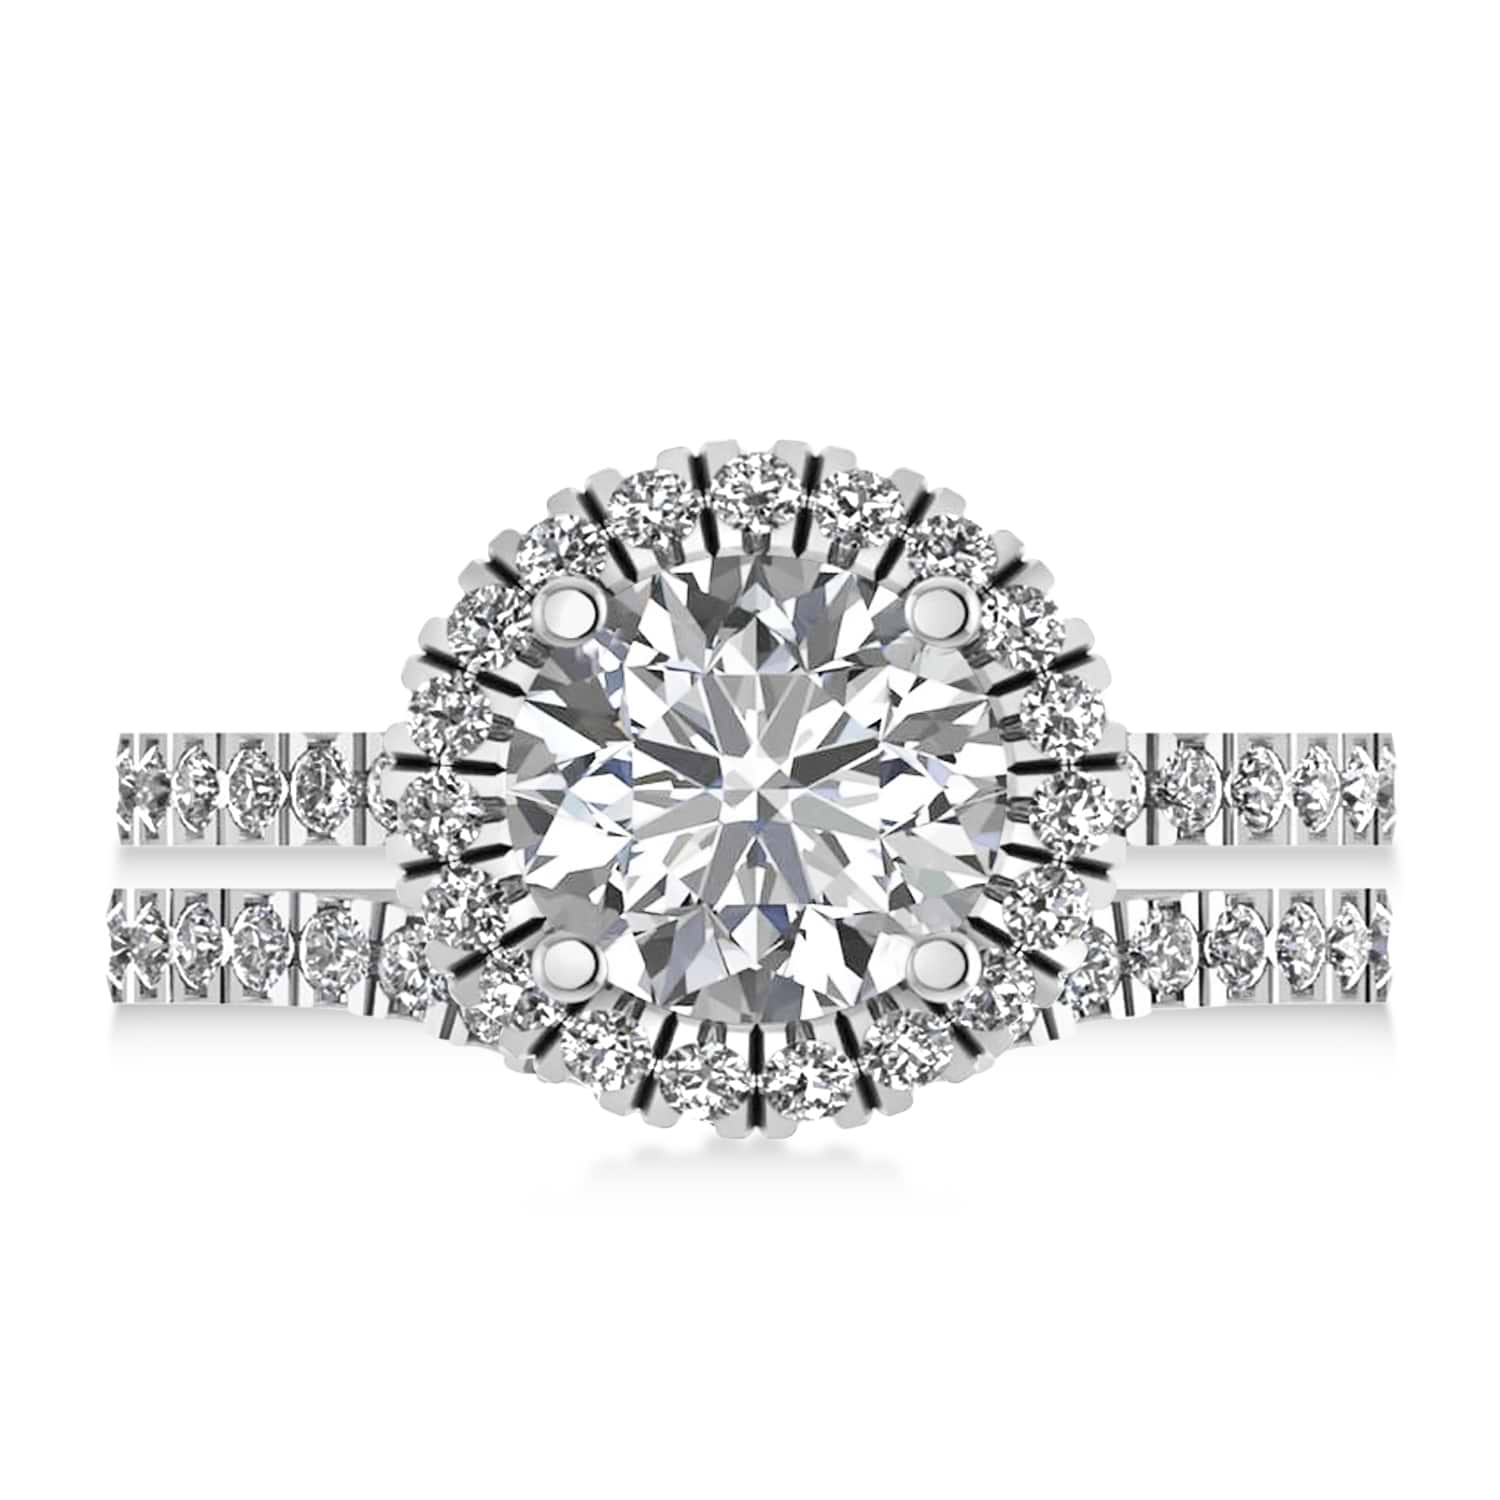 Diamond Round-Cut Halo Bridal Set 14K White Gold (2.77ct)